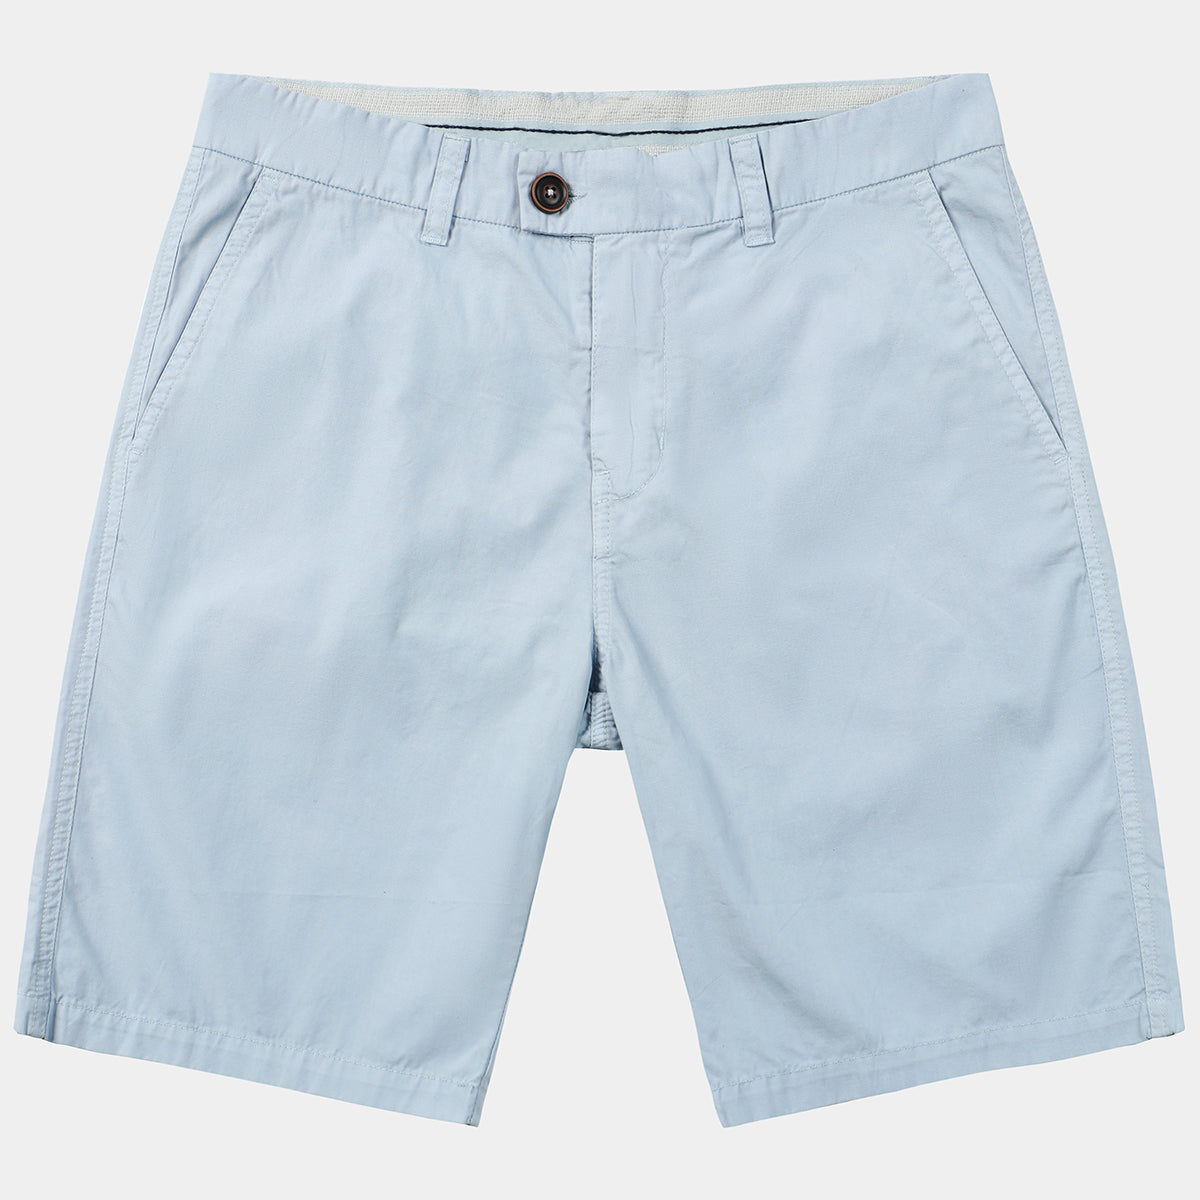 Men's Casual Summer Holiday Cotton Shorts